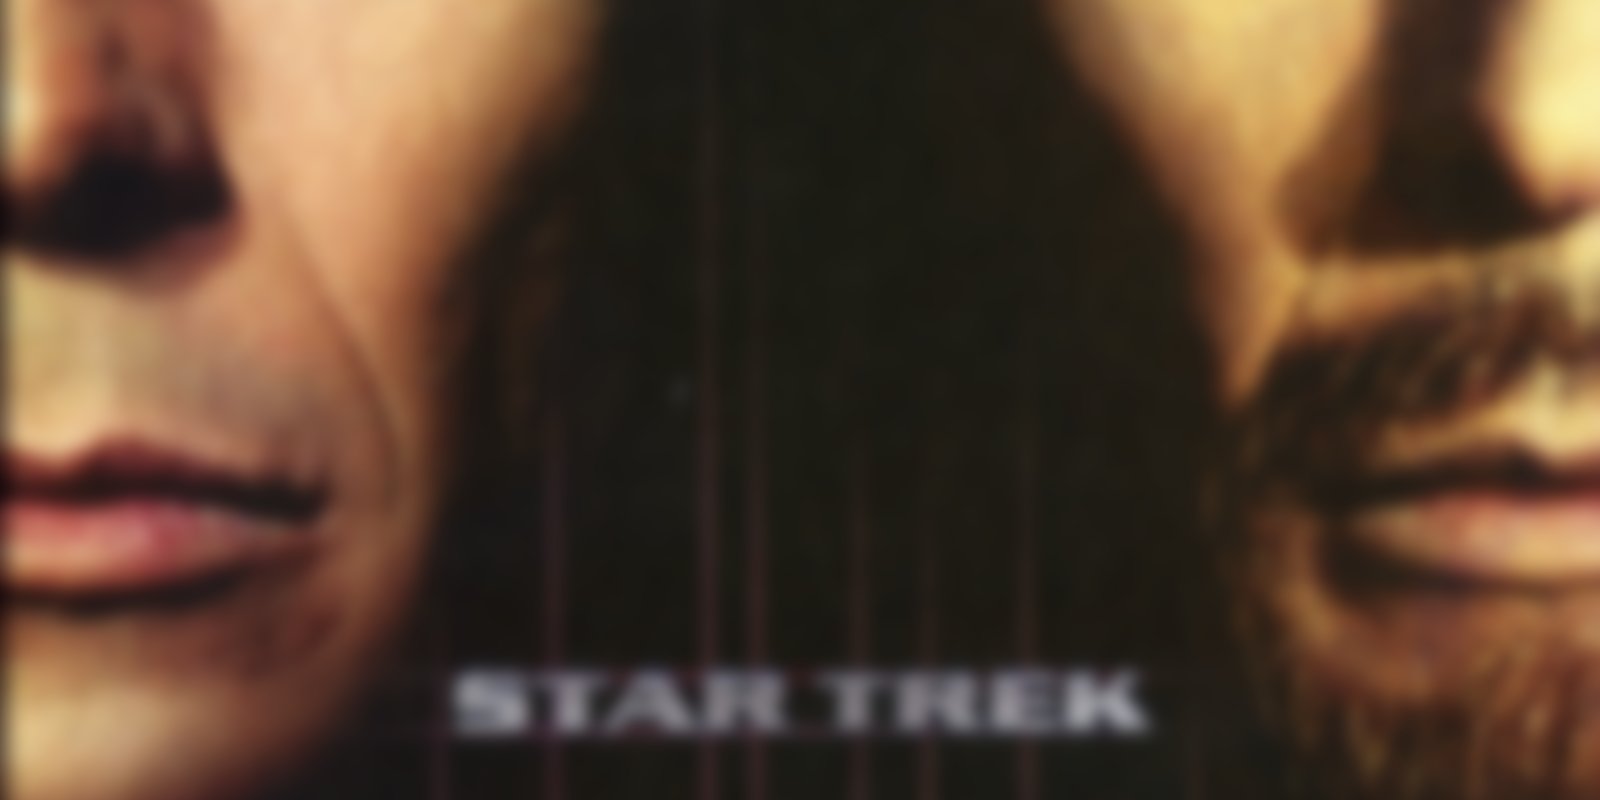 Star Trek - Alternate Realities Collective